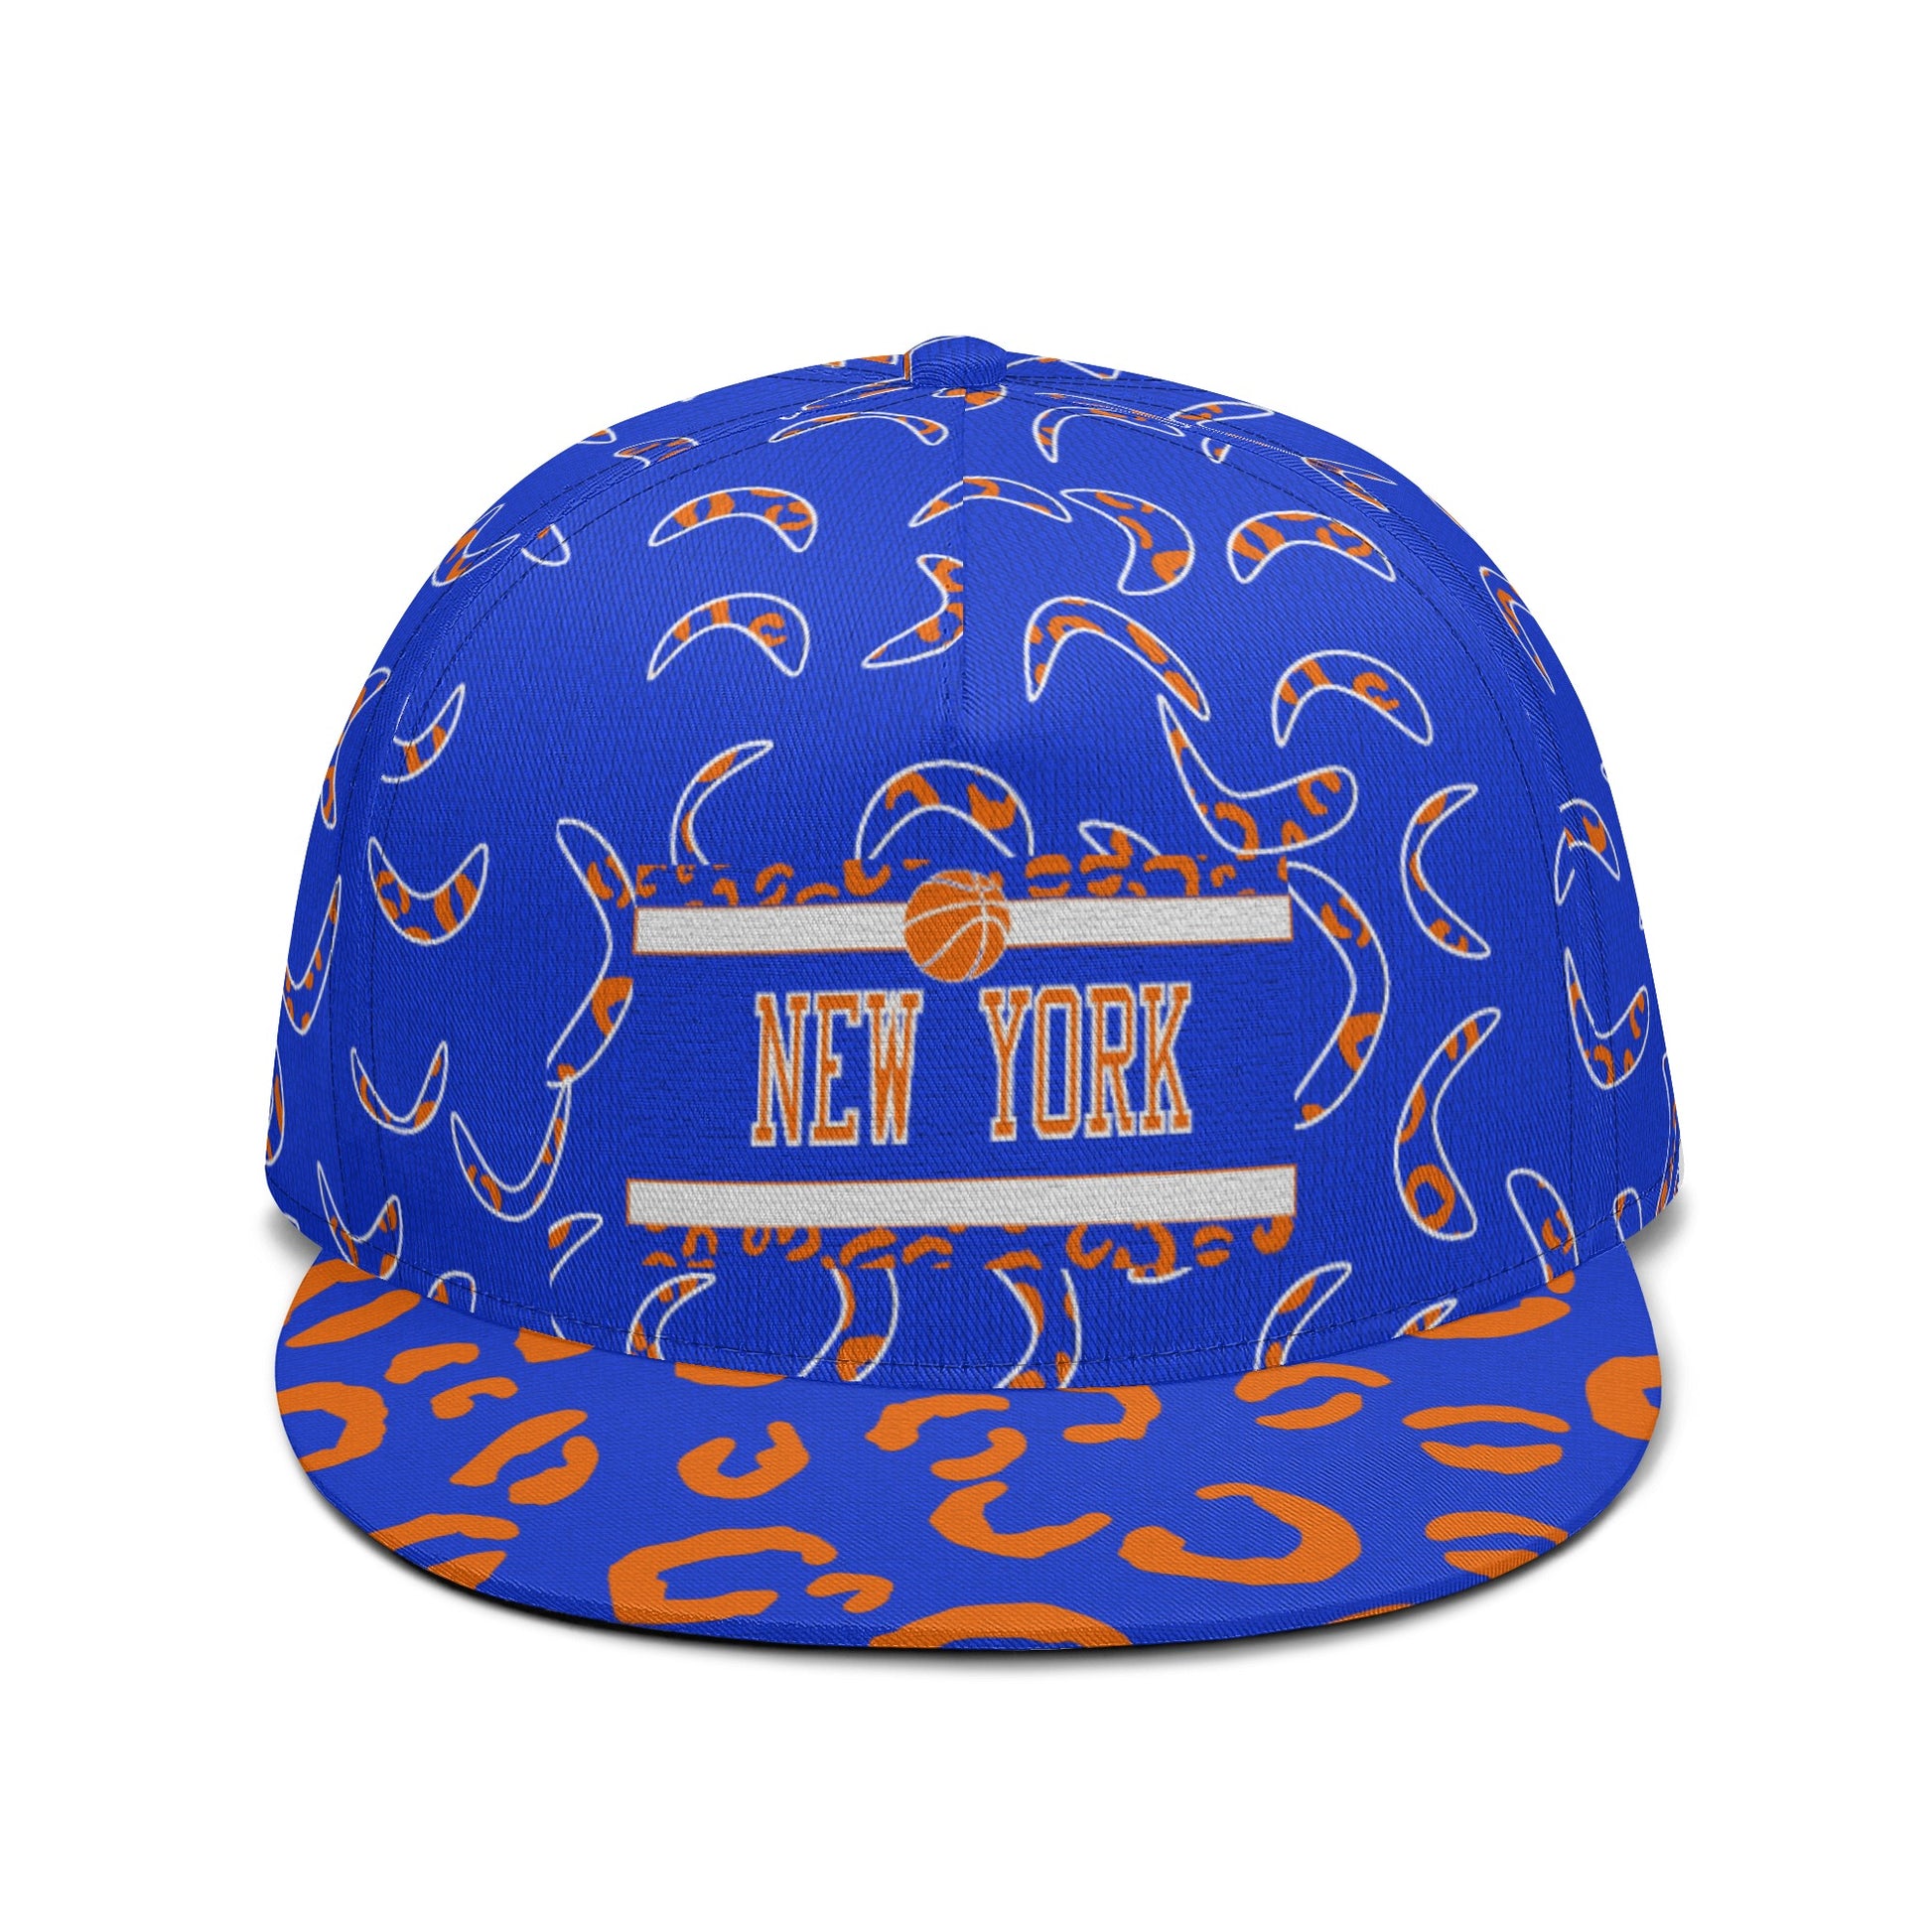 New York Knicks Vintage Vibe Graphic Hoodie - Mens